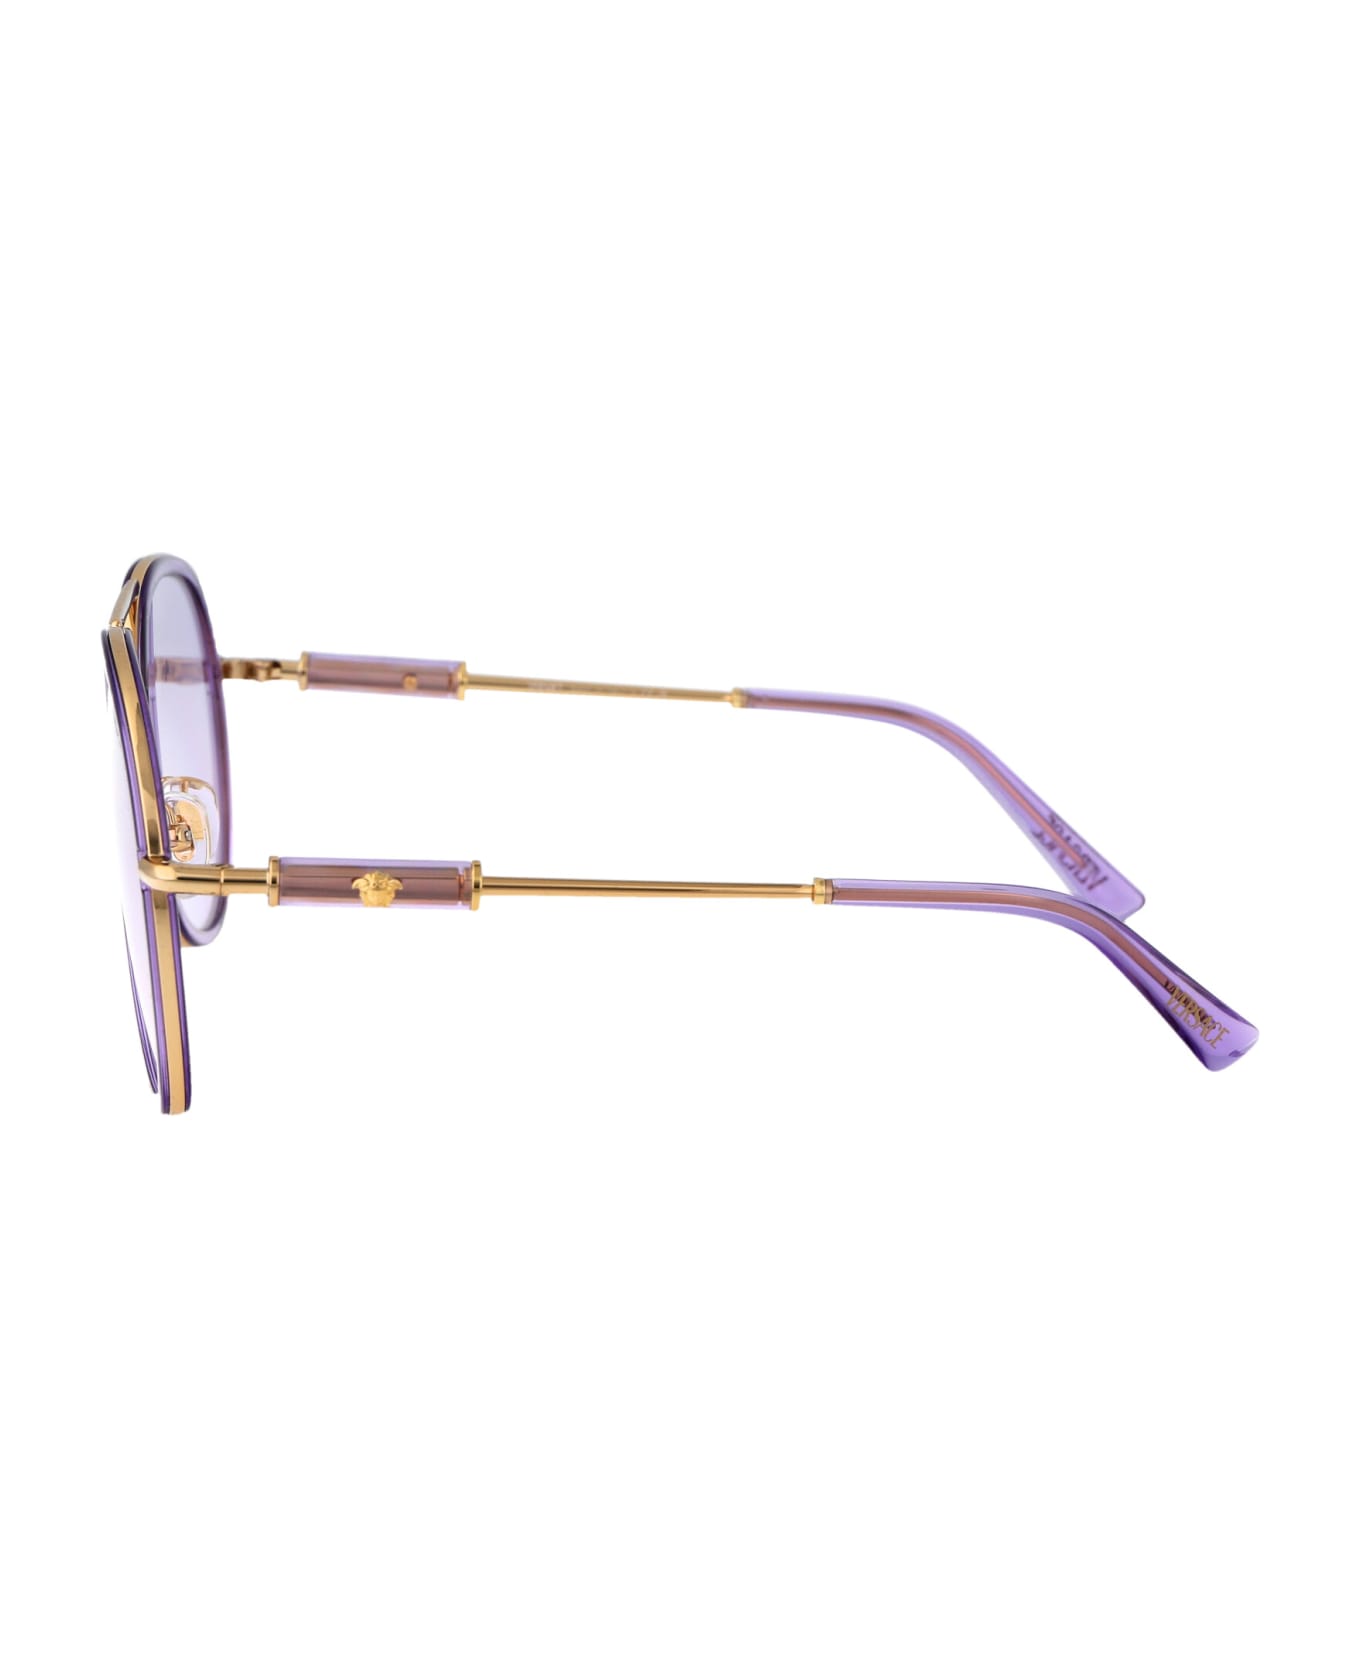 Versace Eyewear 0ve2260 Sunglasses - 10021A Lilac Transparent サングラス